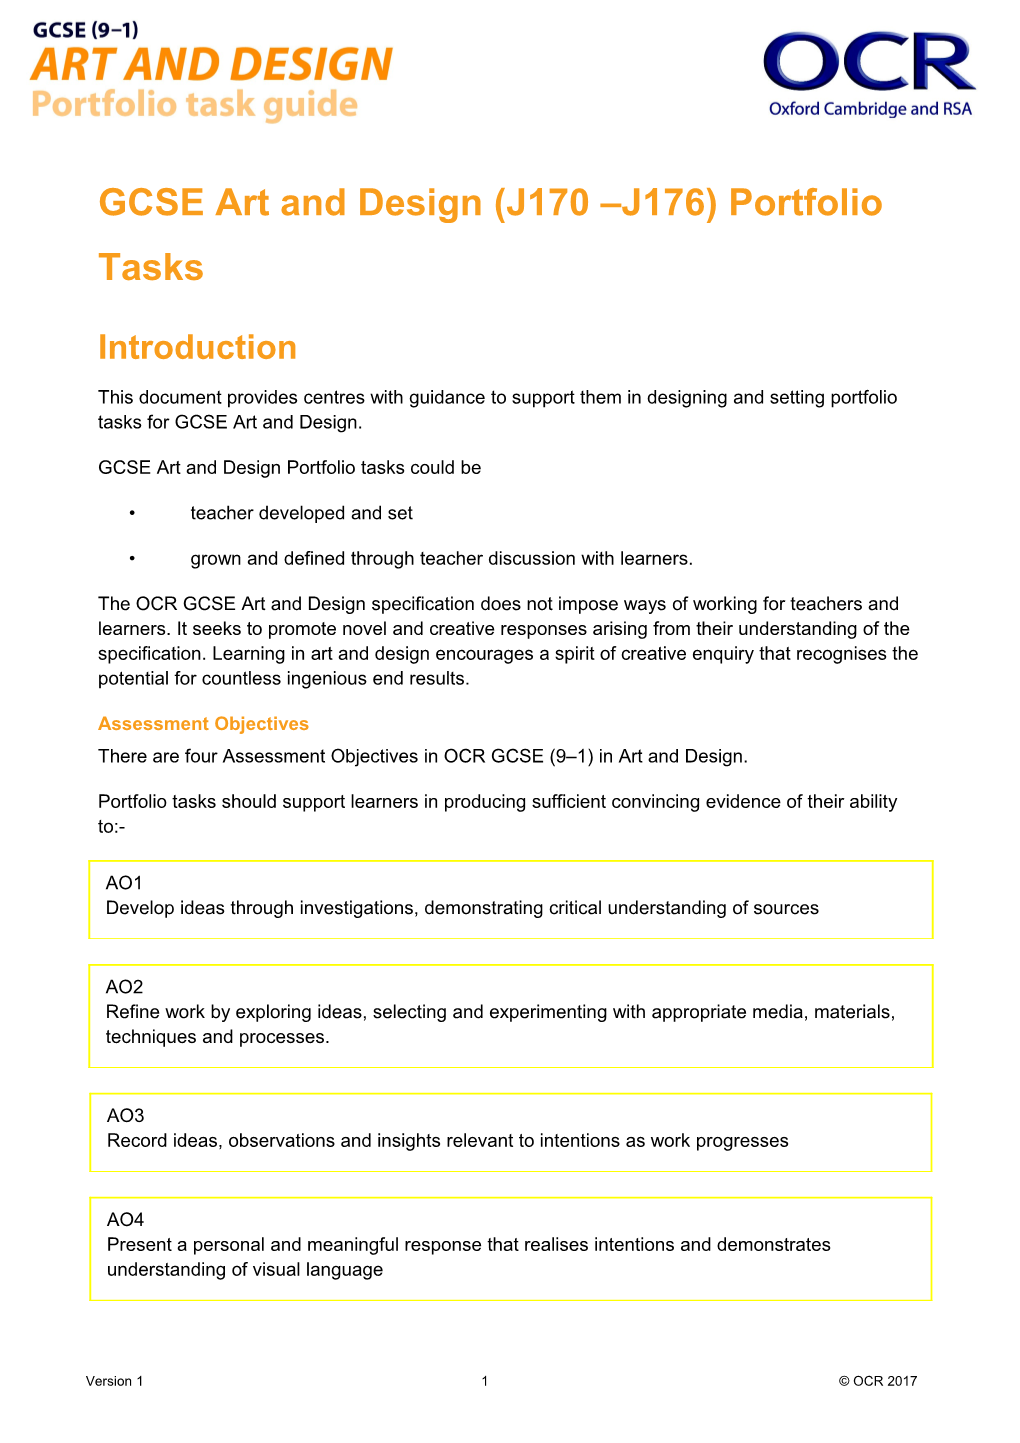 GCSE (9-1) Art and Design Portfolio Task Guide